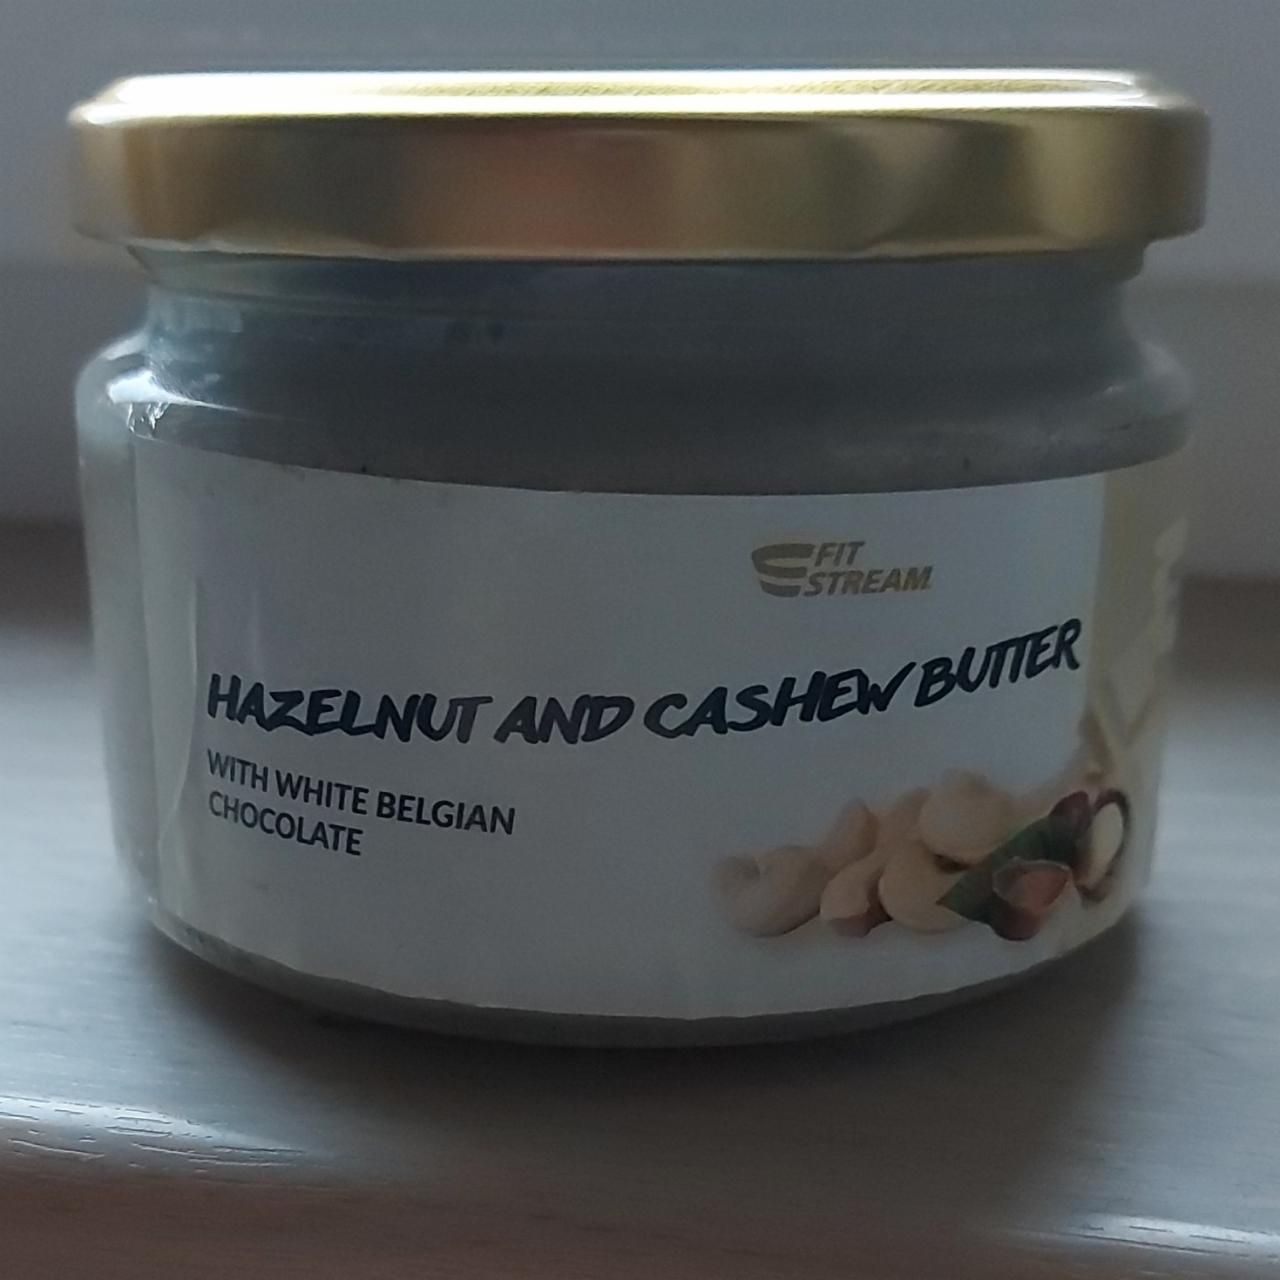 Fotografie - Hazelnut and cashew butter Fit stream